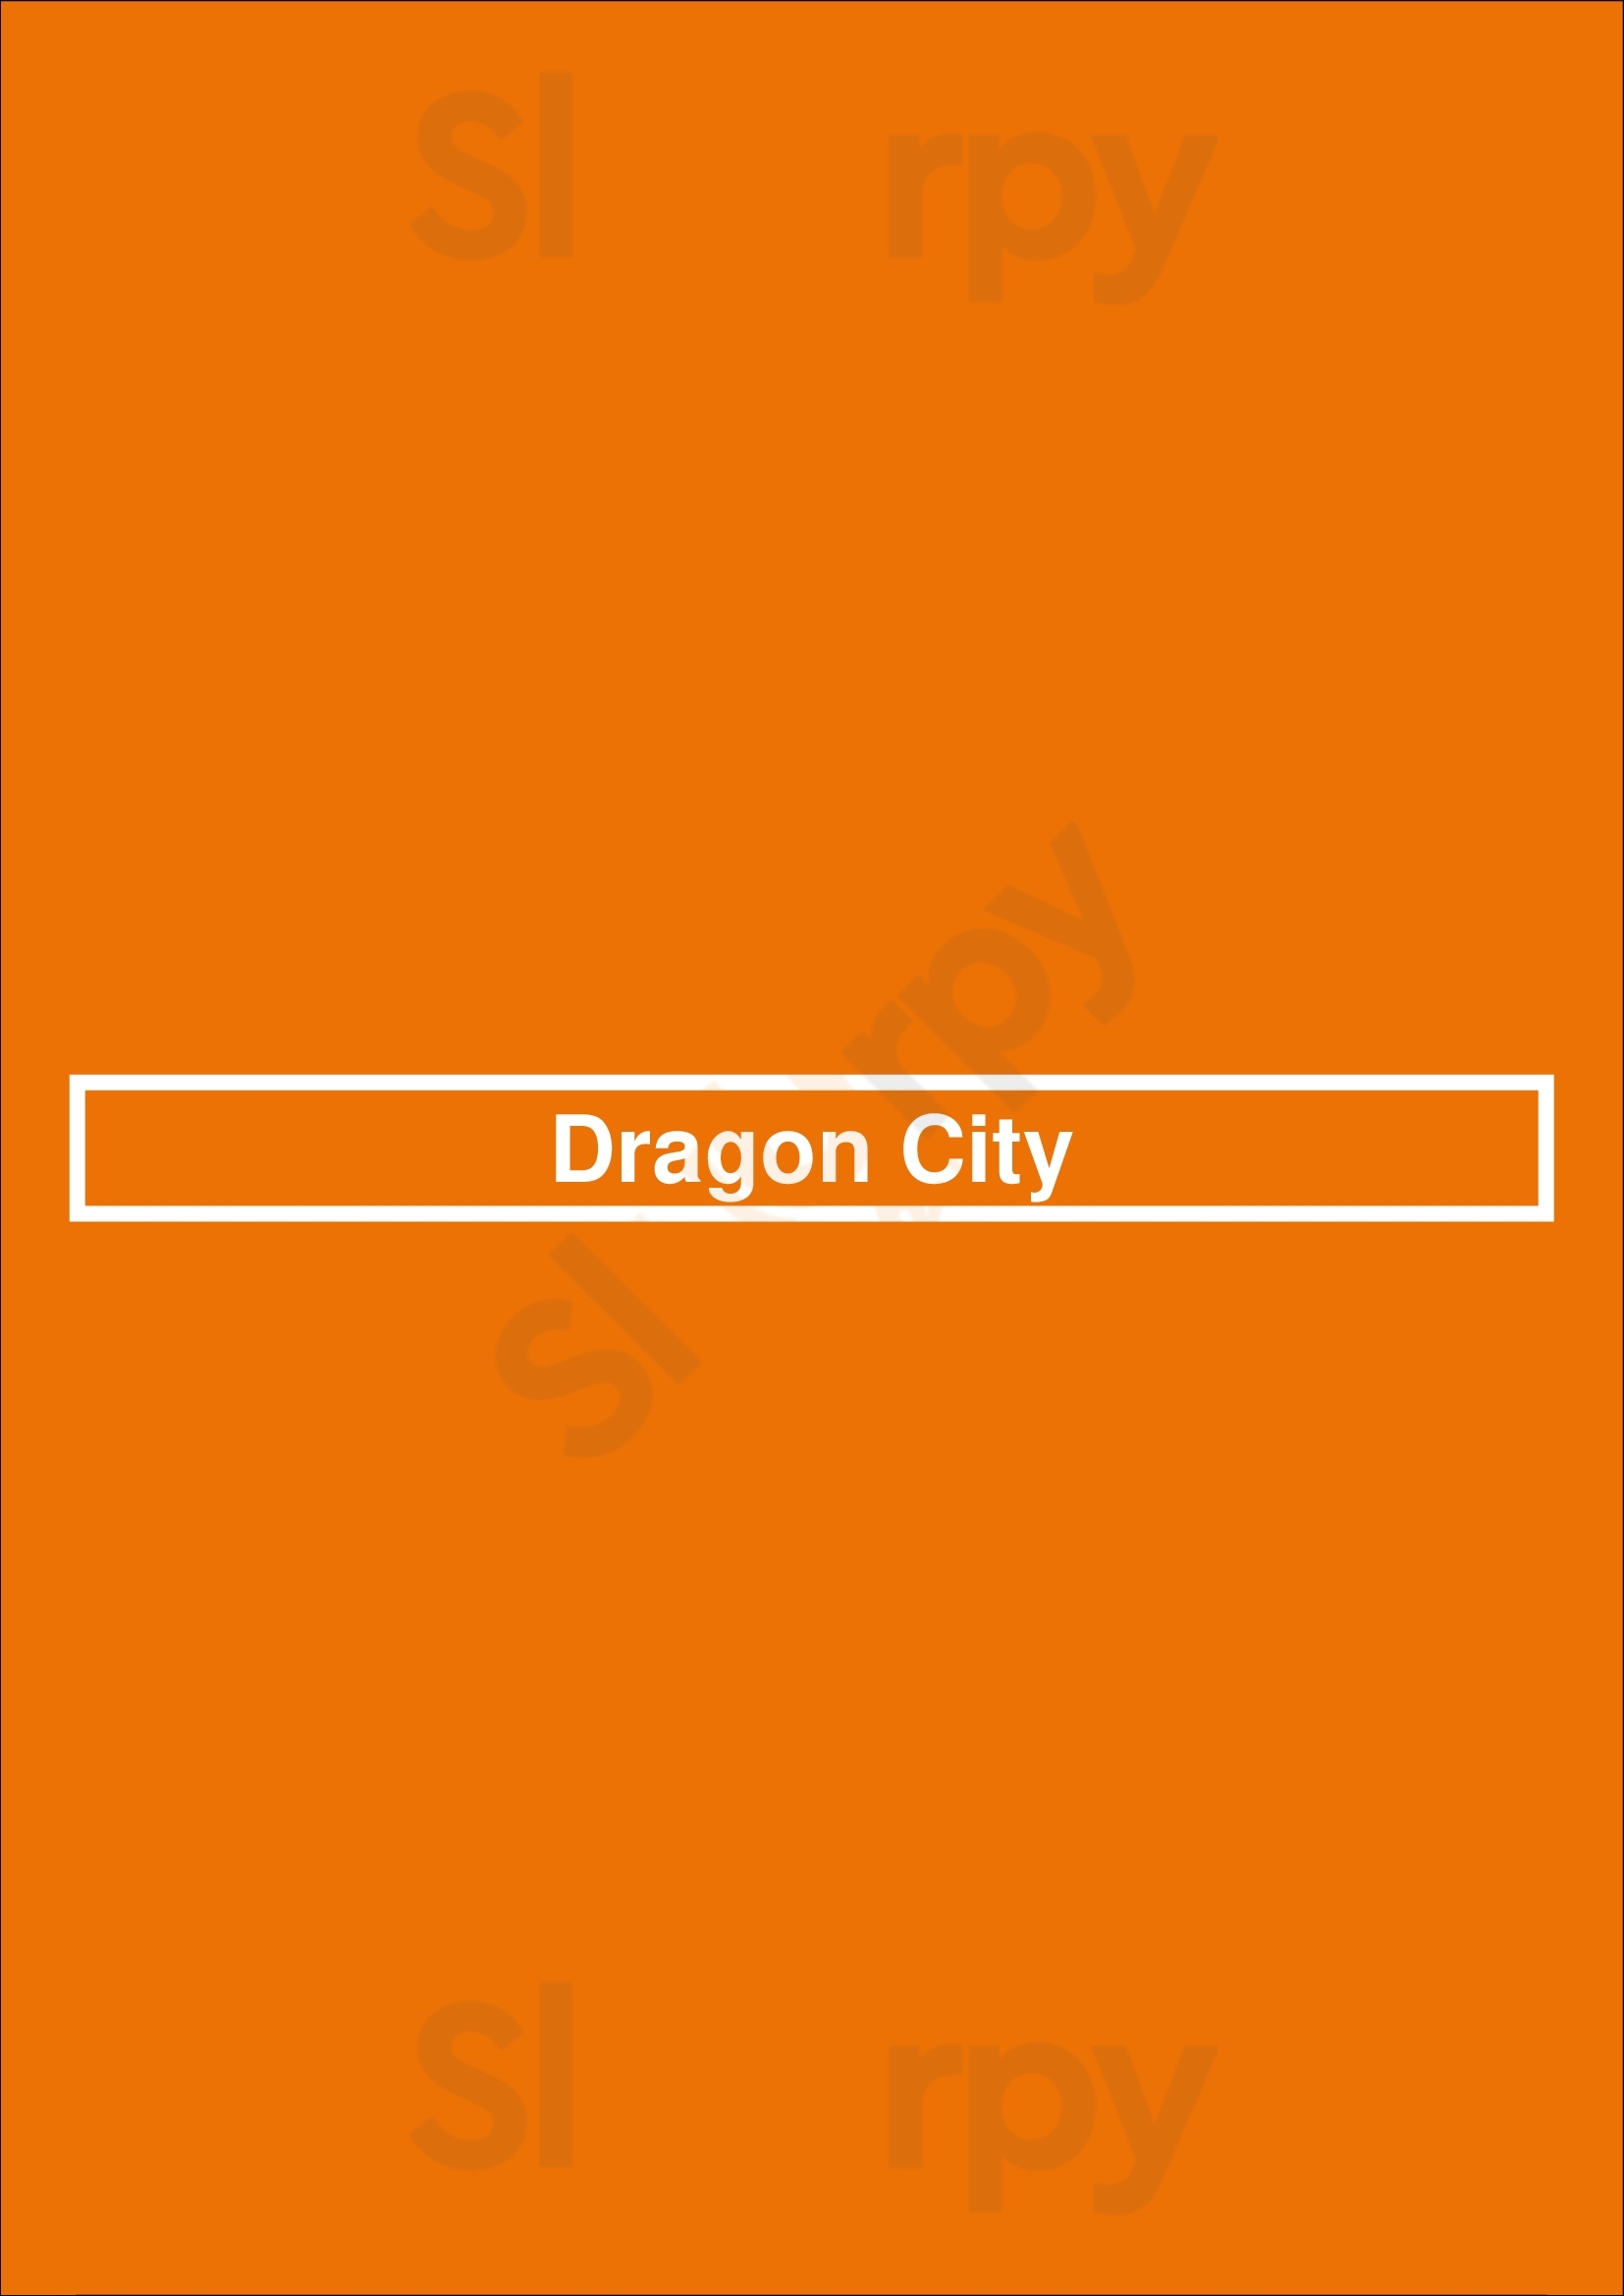 Dragon City Amsterdam Menu - 1